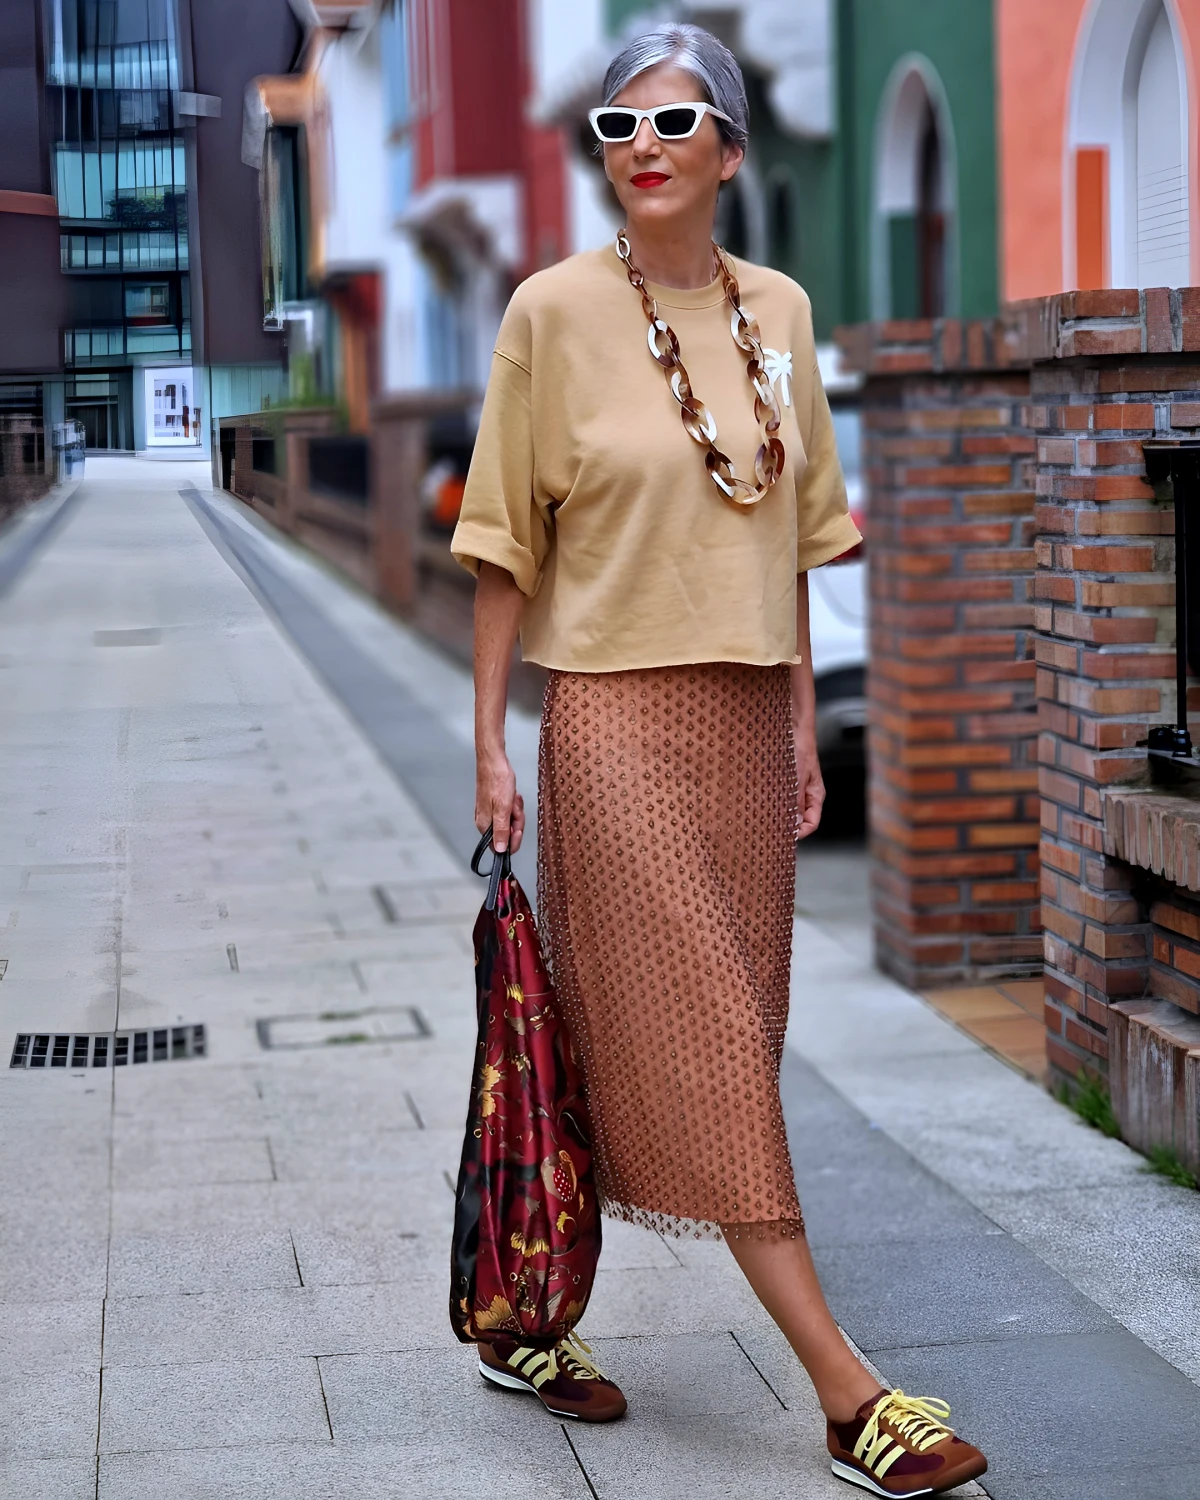 mode femme 50 ans look moderne avec jupe et top marron